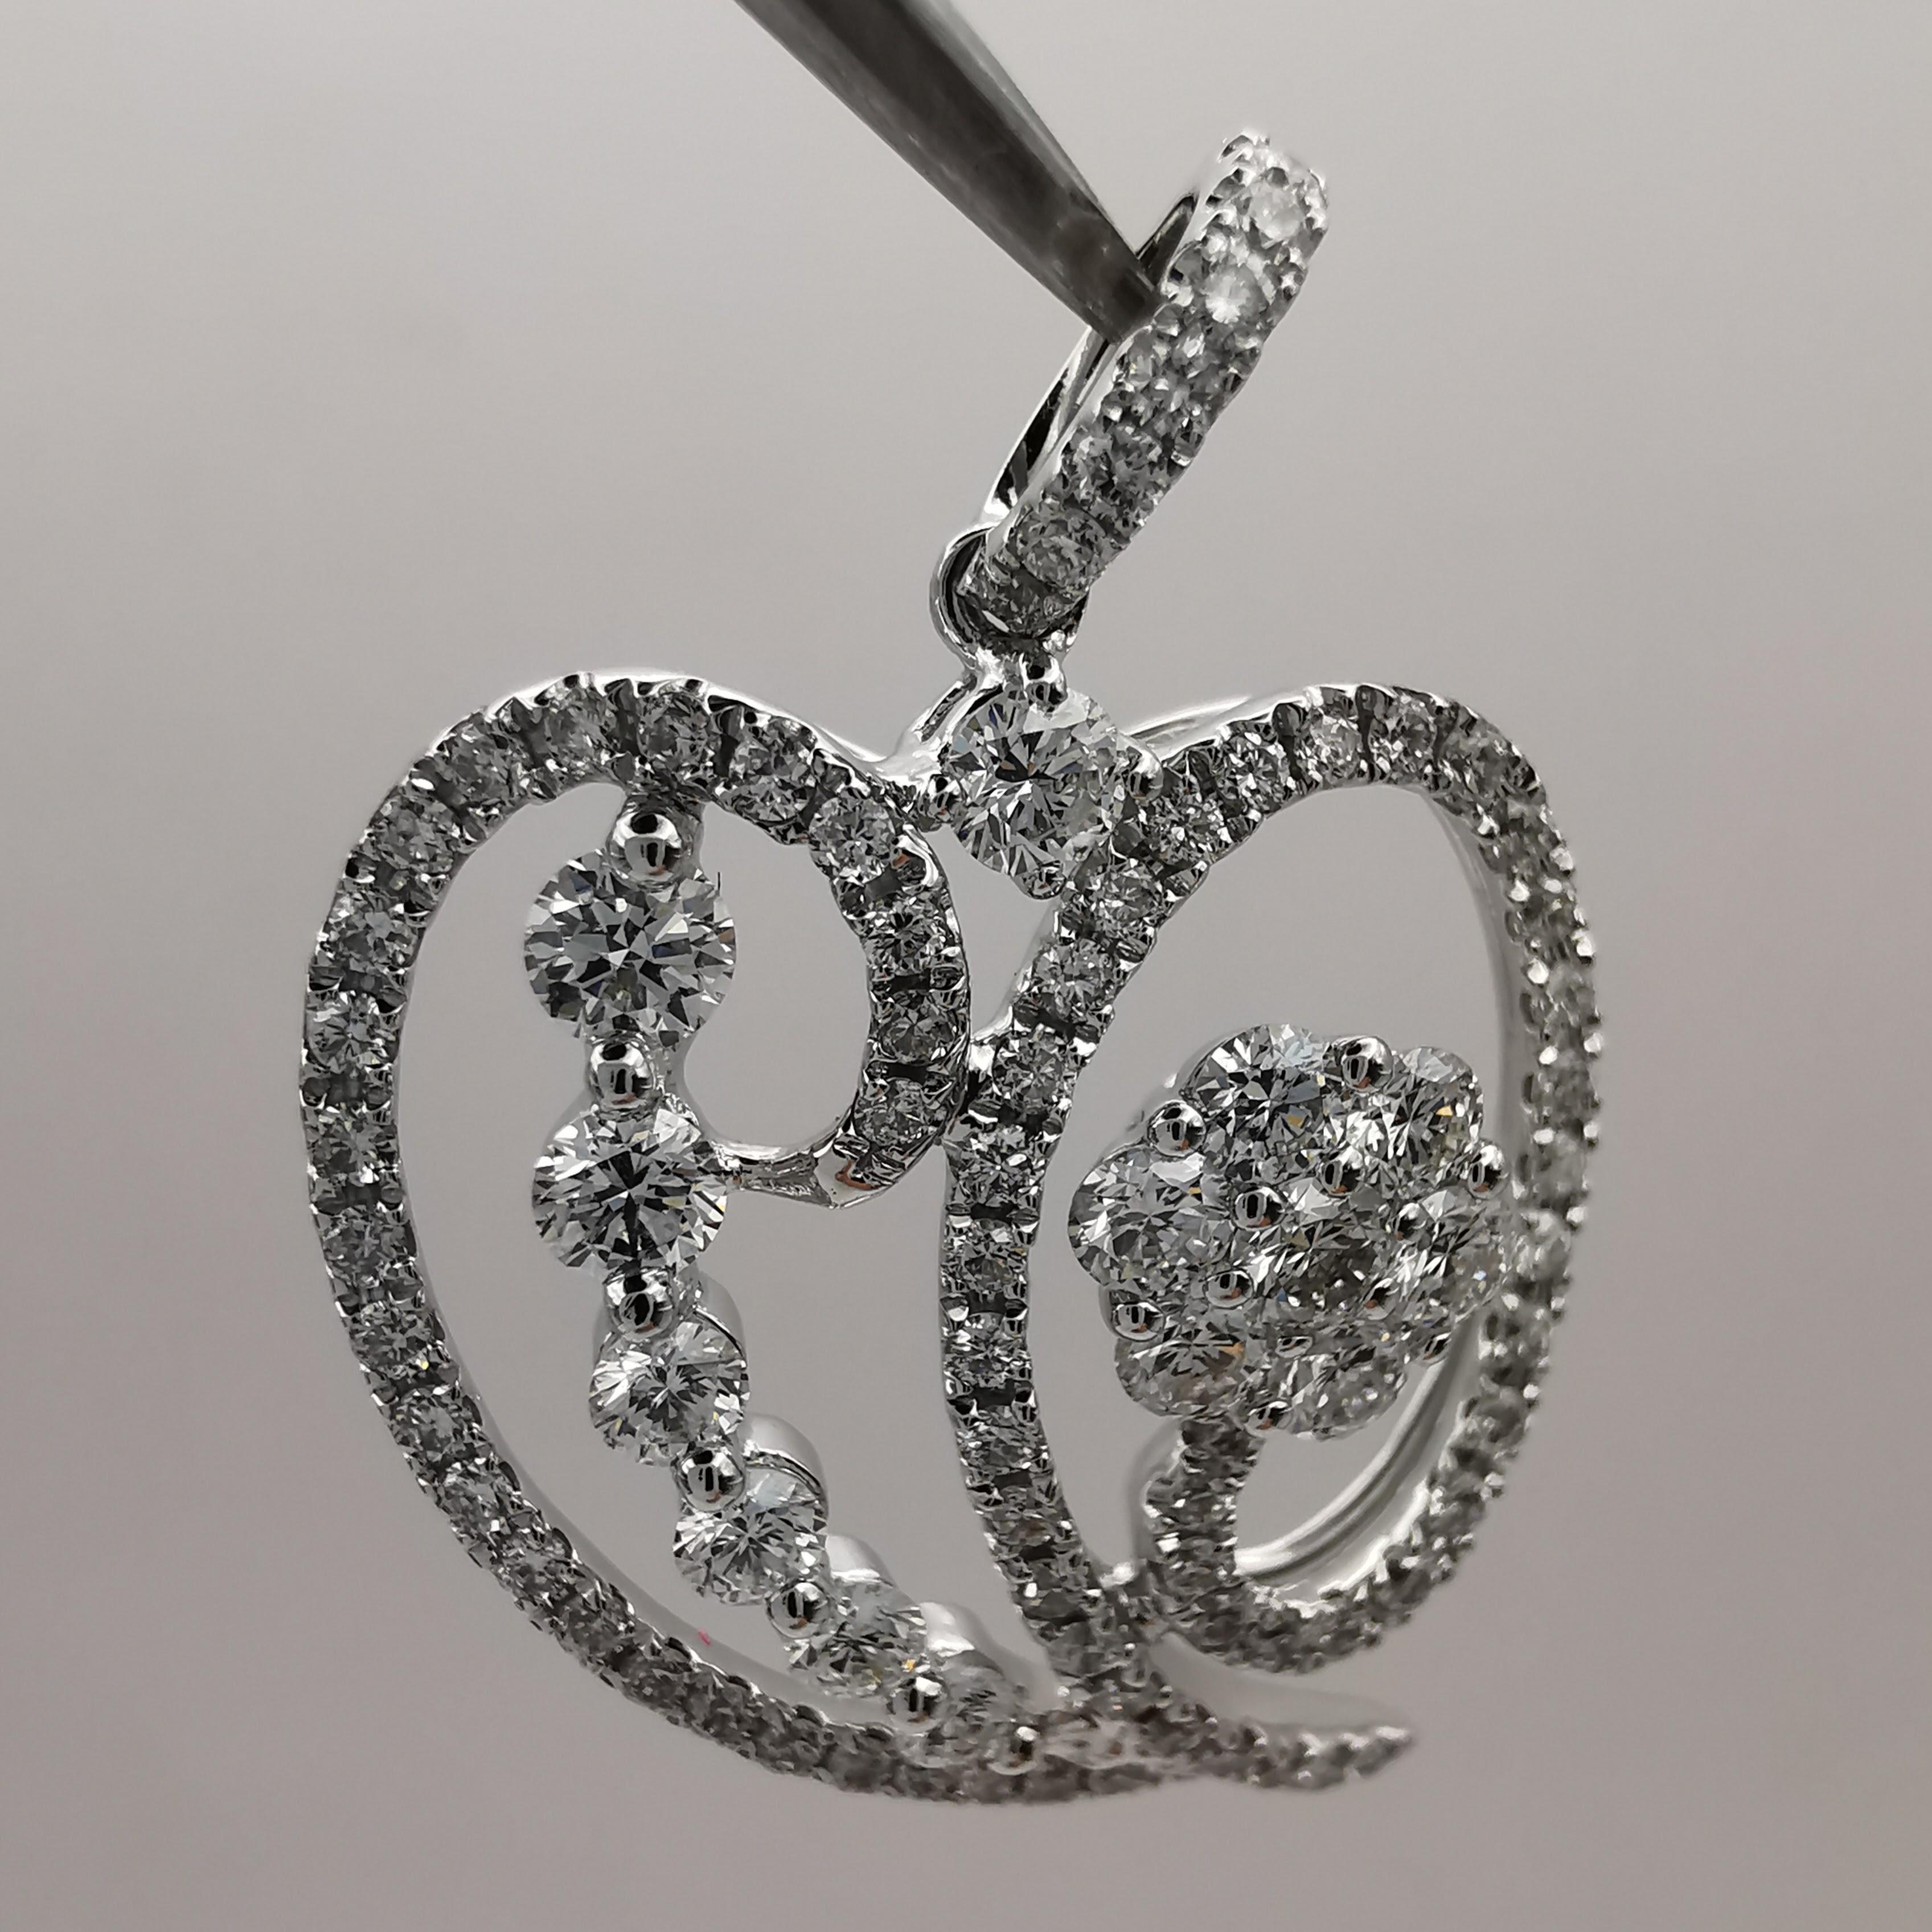 Heart-shaped Bell Pepper .97 Carat Diamond 18K White Gold Pendant Necklace For Sale 4